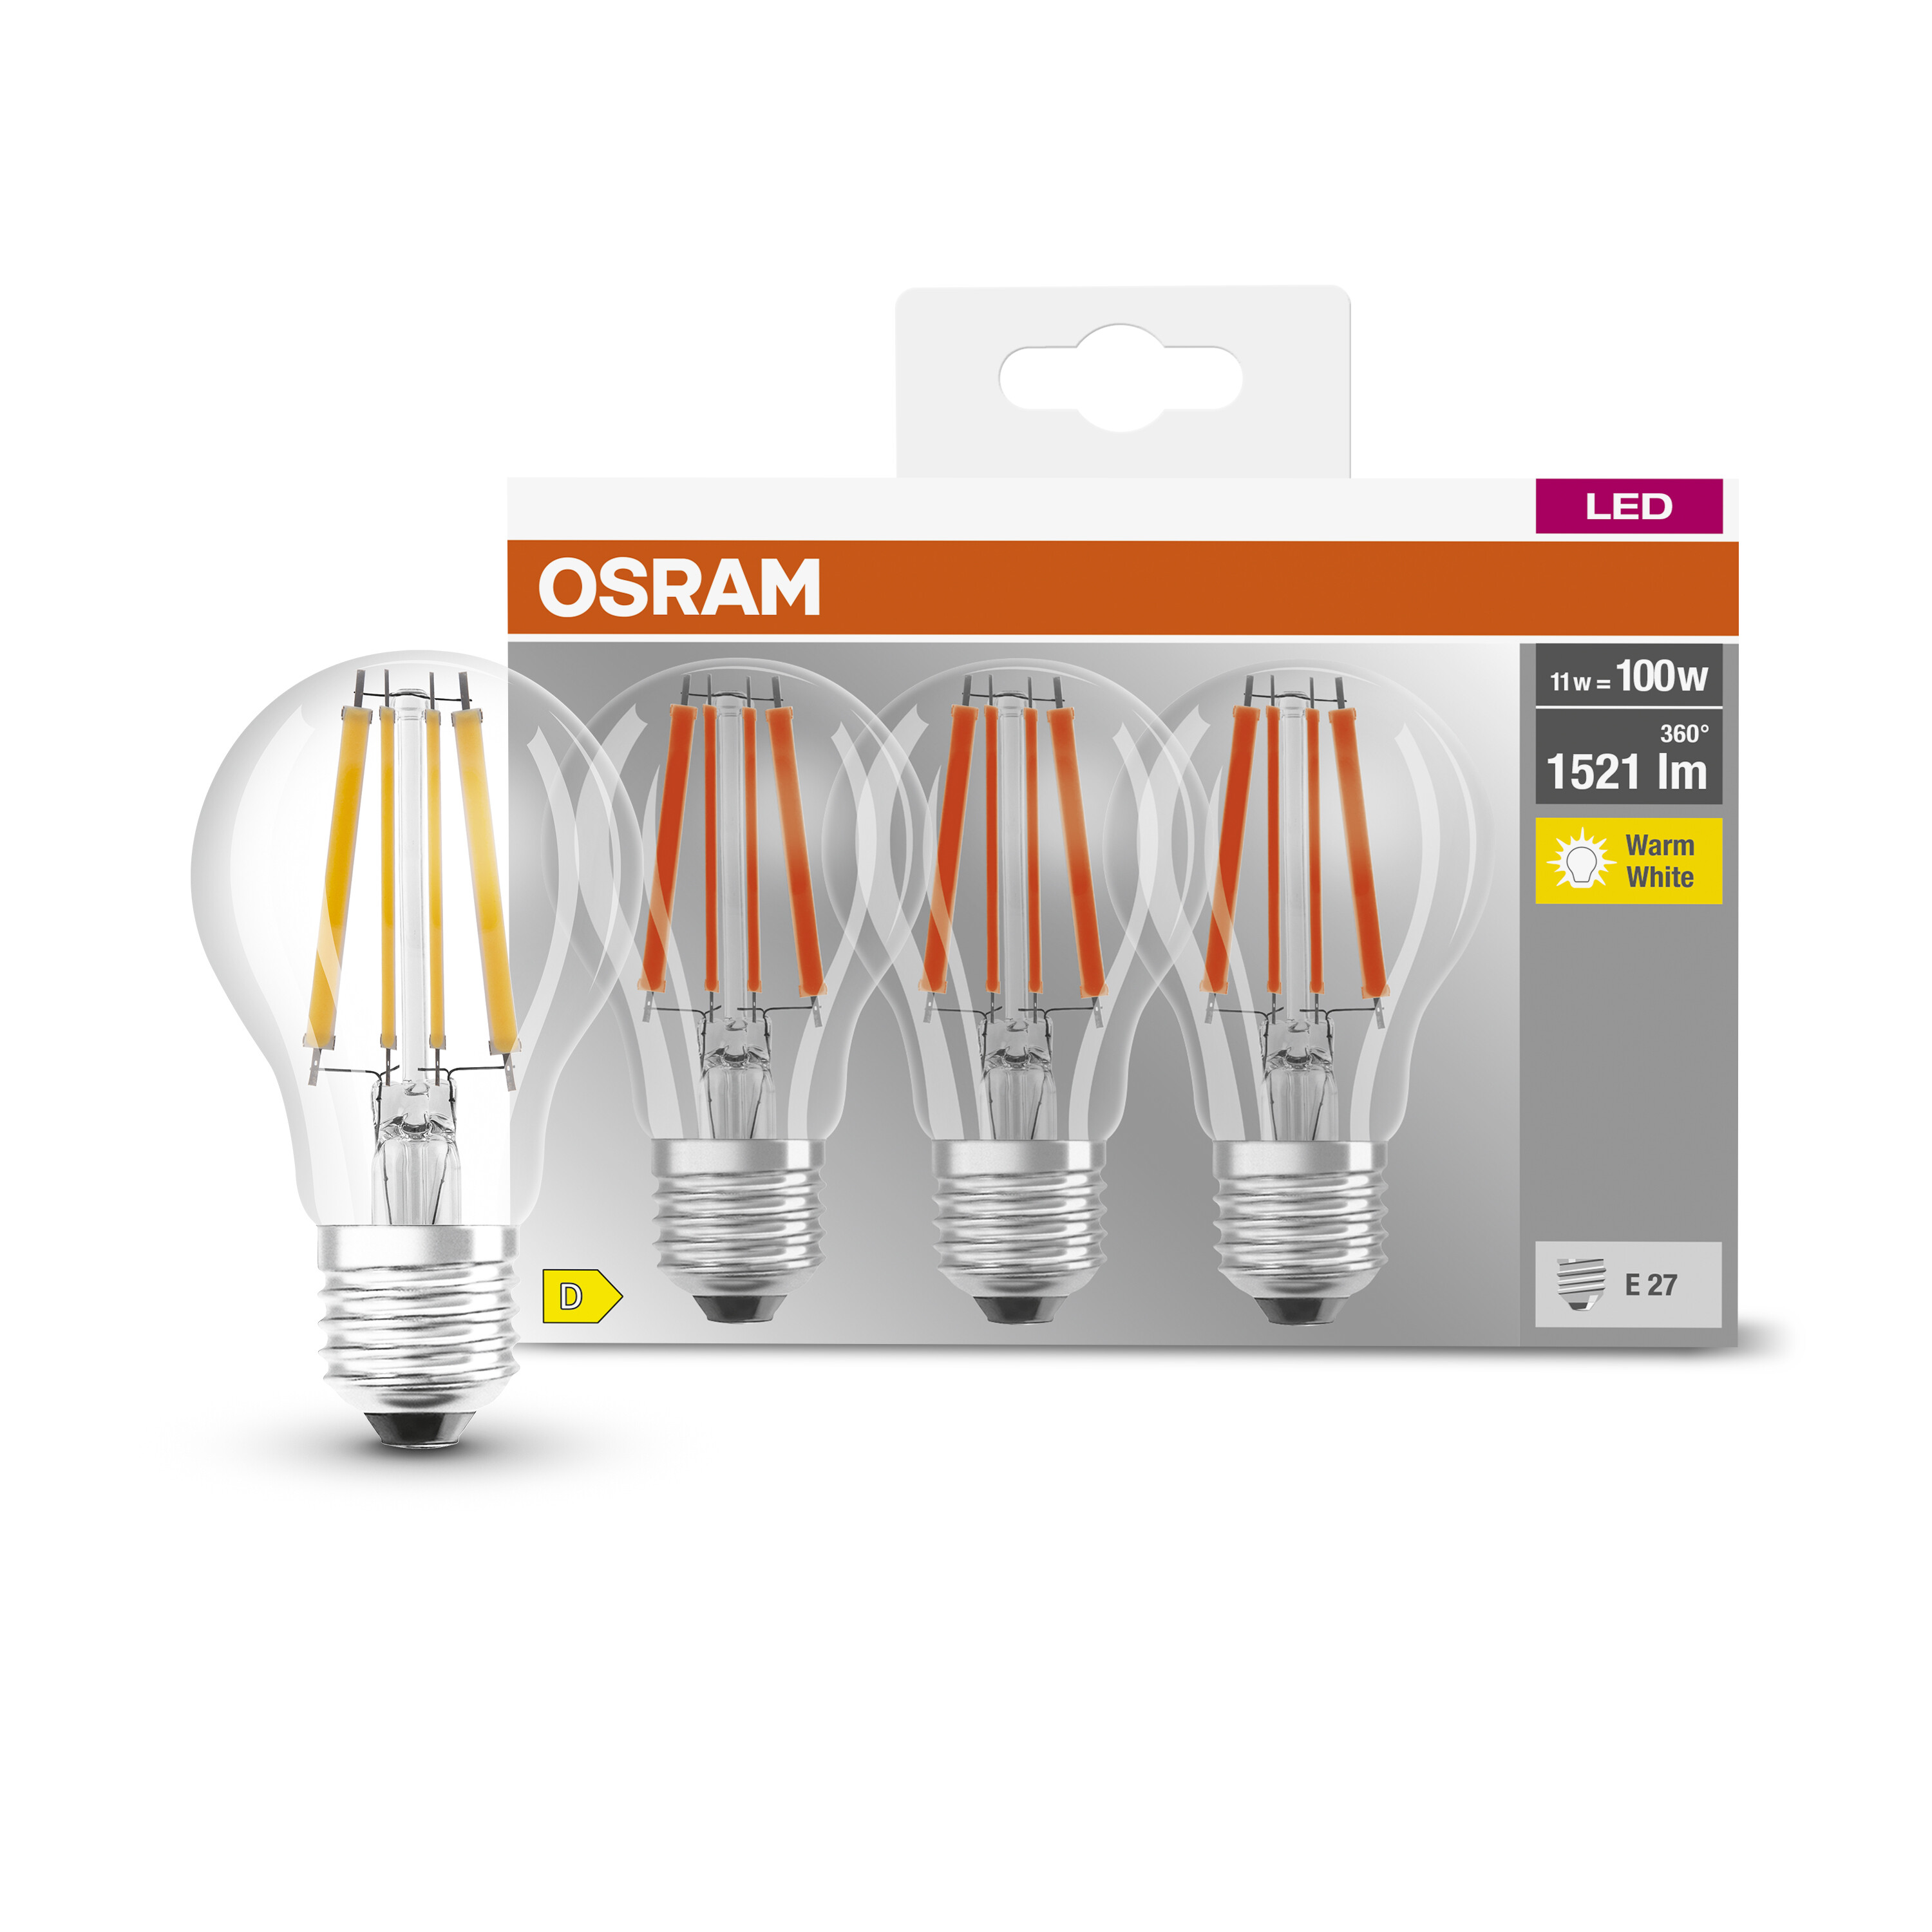 LED CLASSIC OSRAM  Lampe A lumen 1521 Warmweiß BASE LED